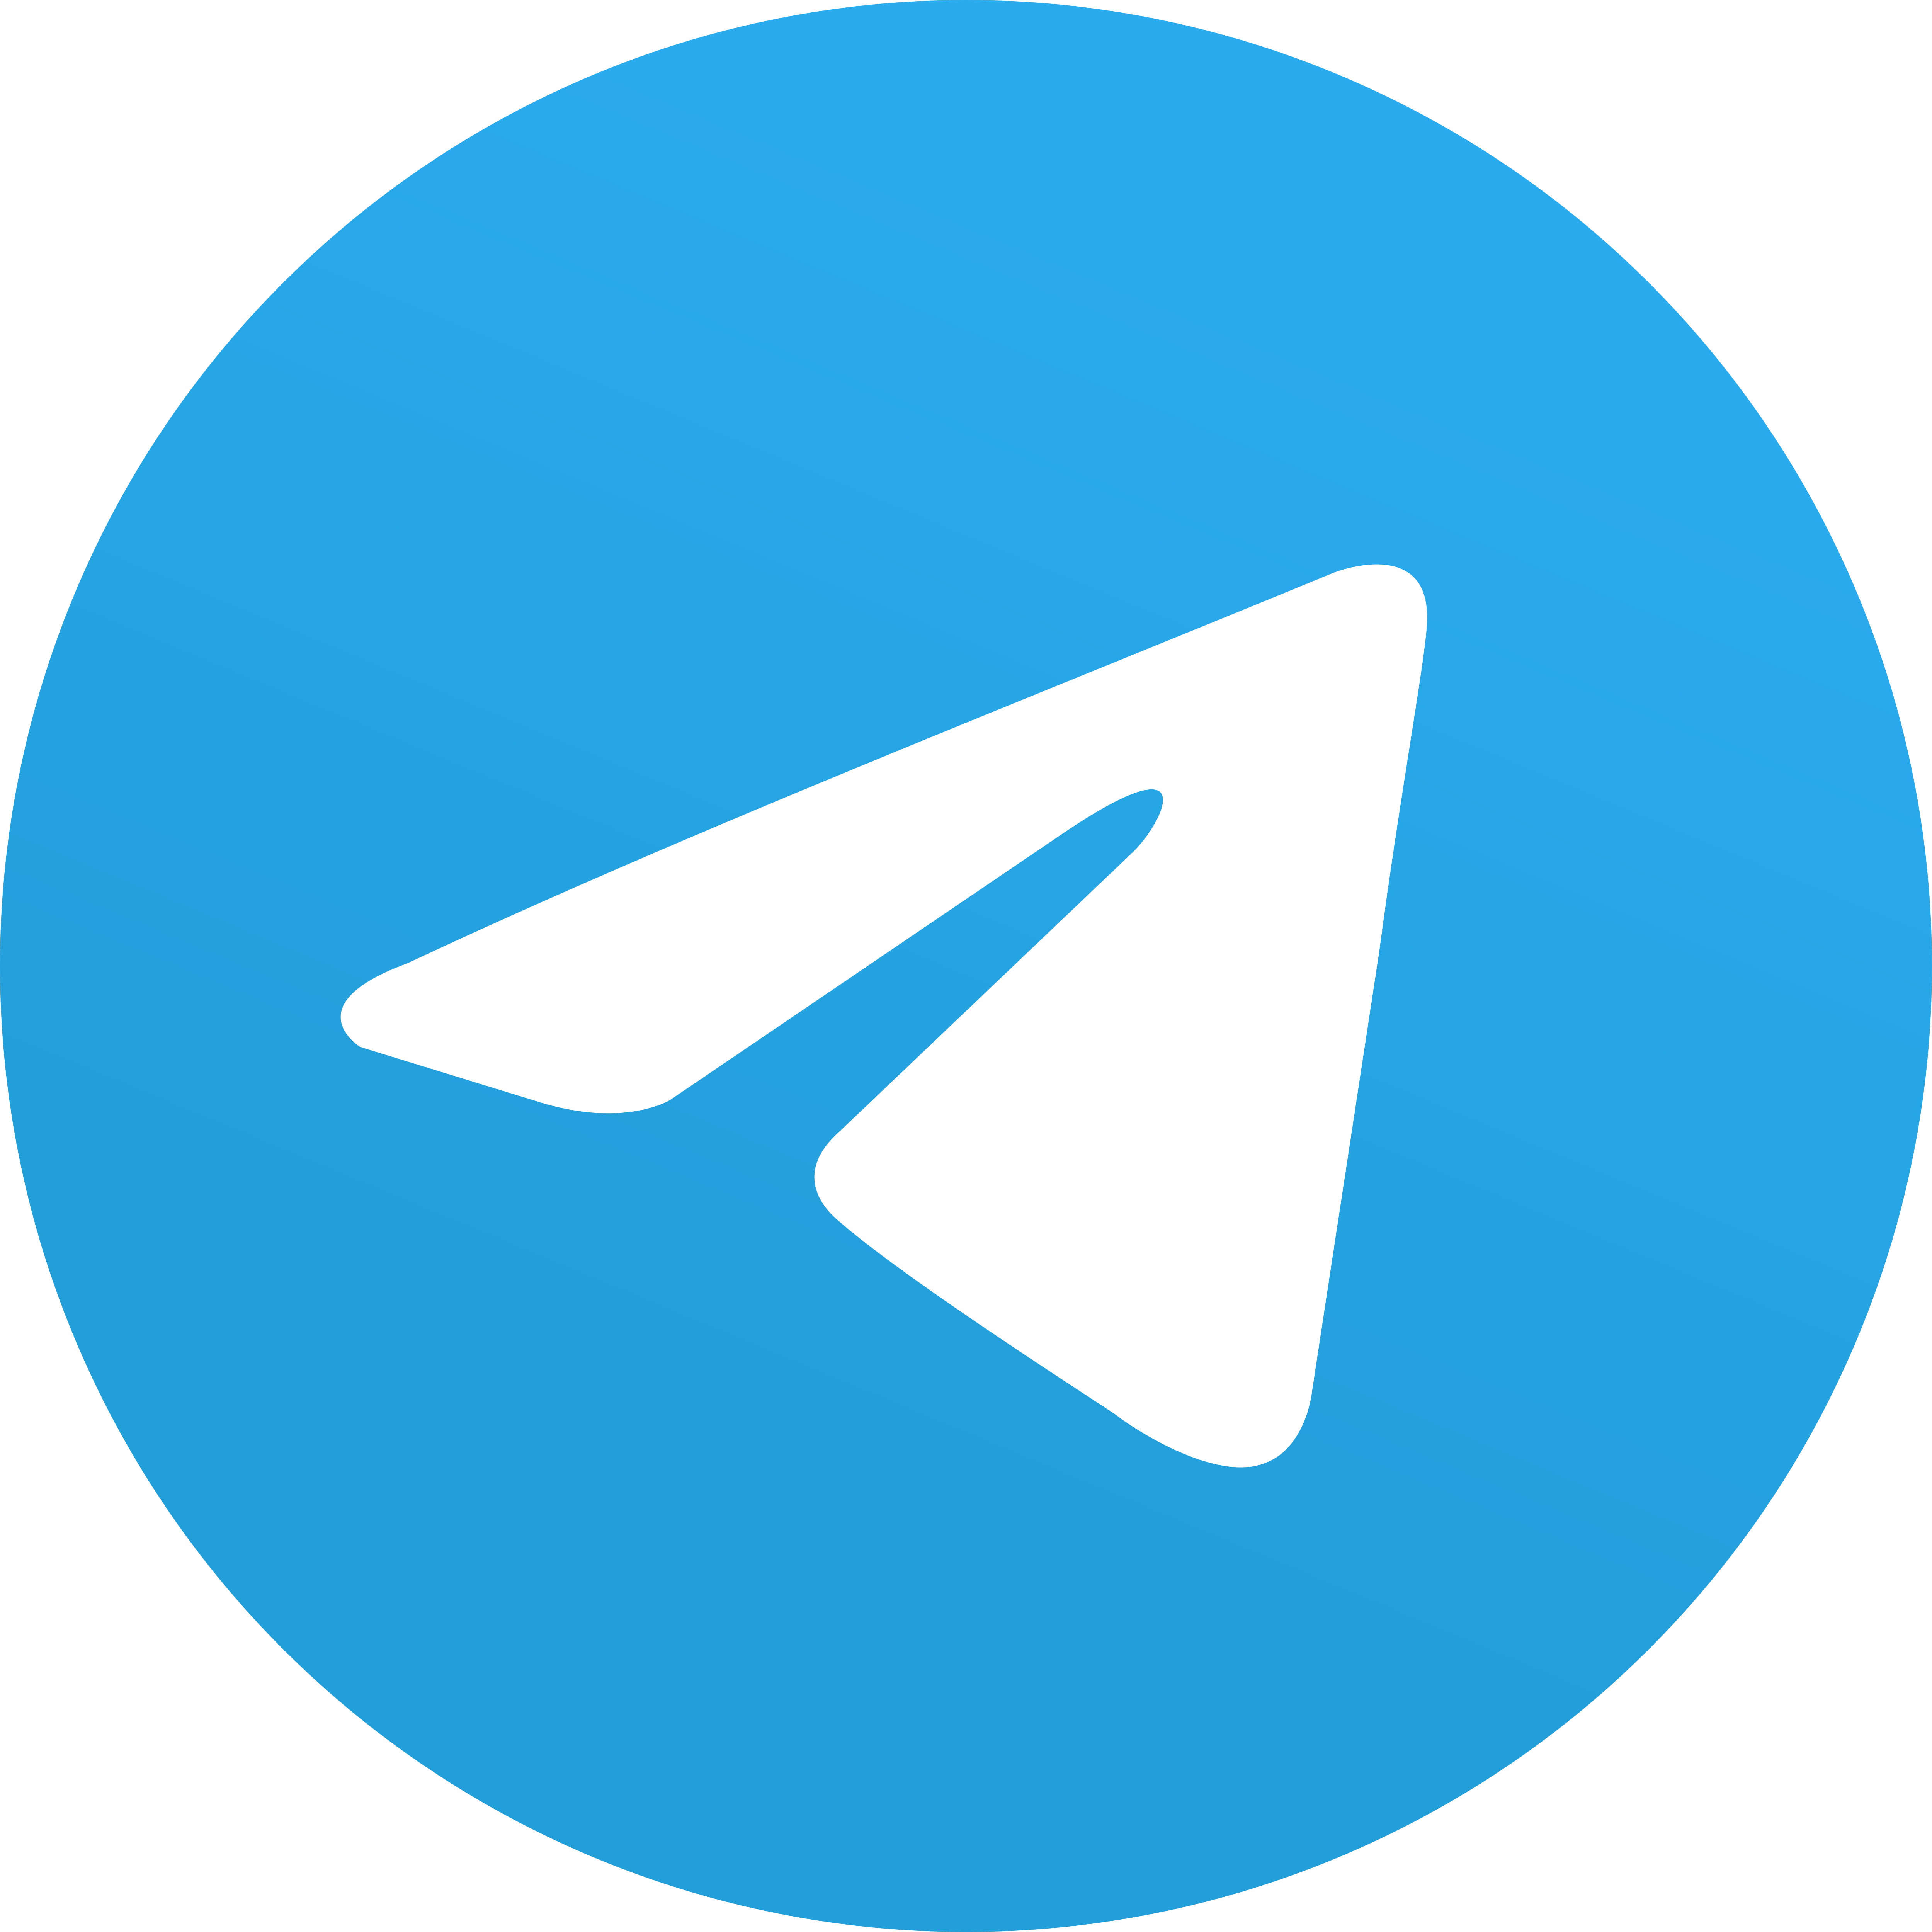 Telegram Бот